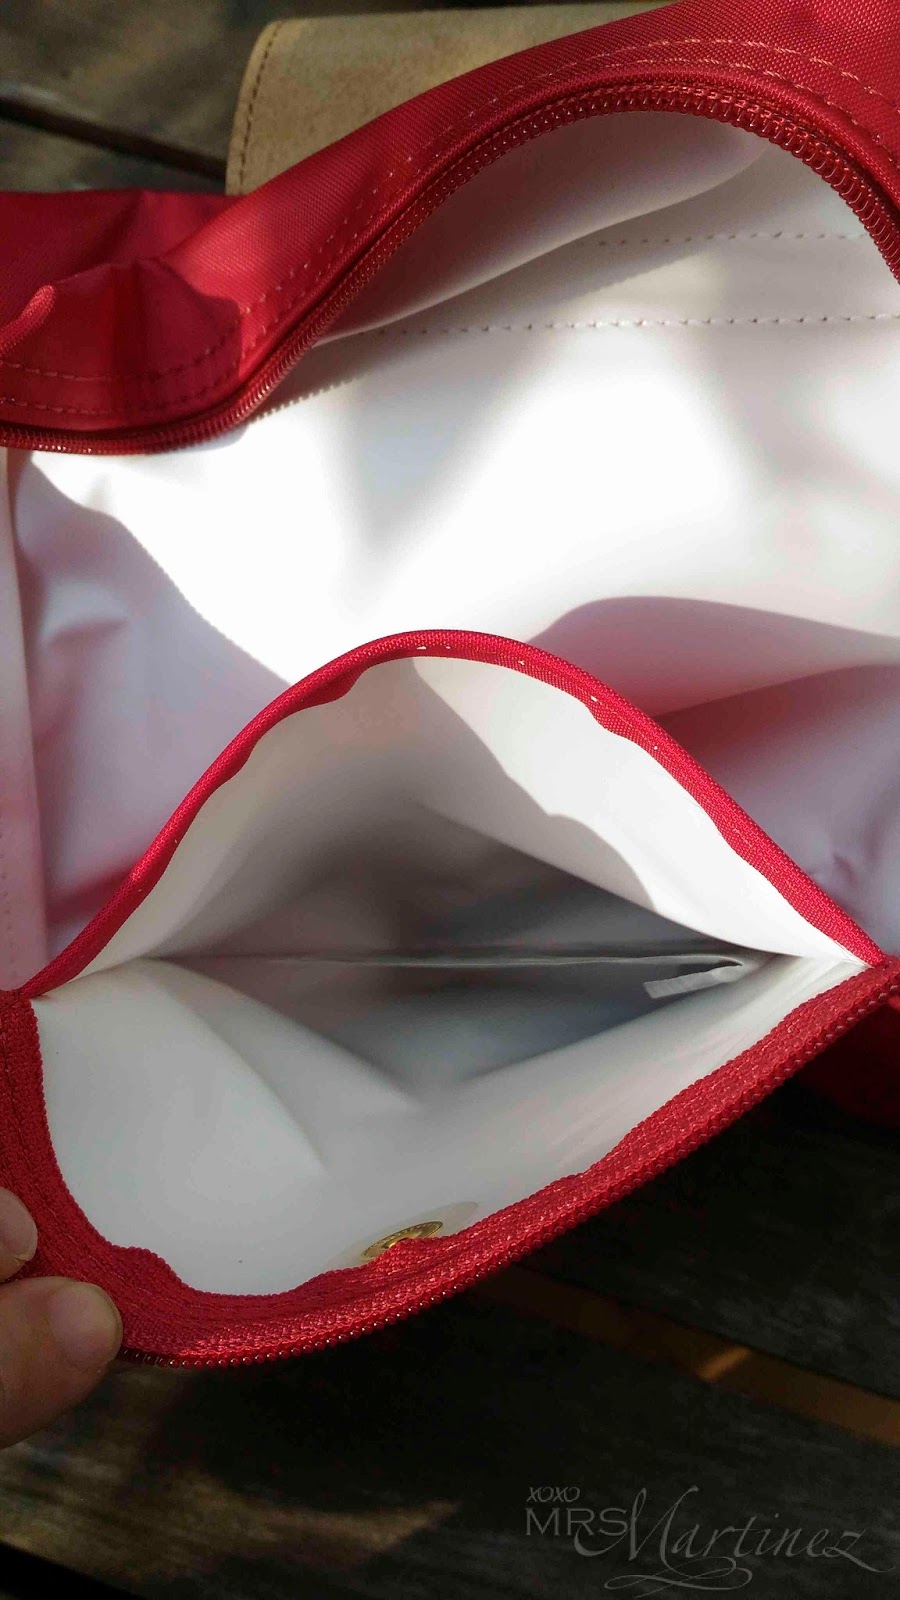 Anello Nylon Mini Backpack in Grey Beige, How to Spot a Fake Updated  (Latest) Version - xoxo MrsMartinez